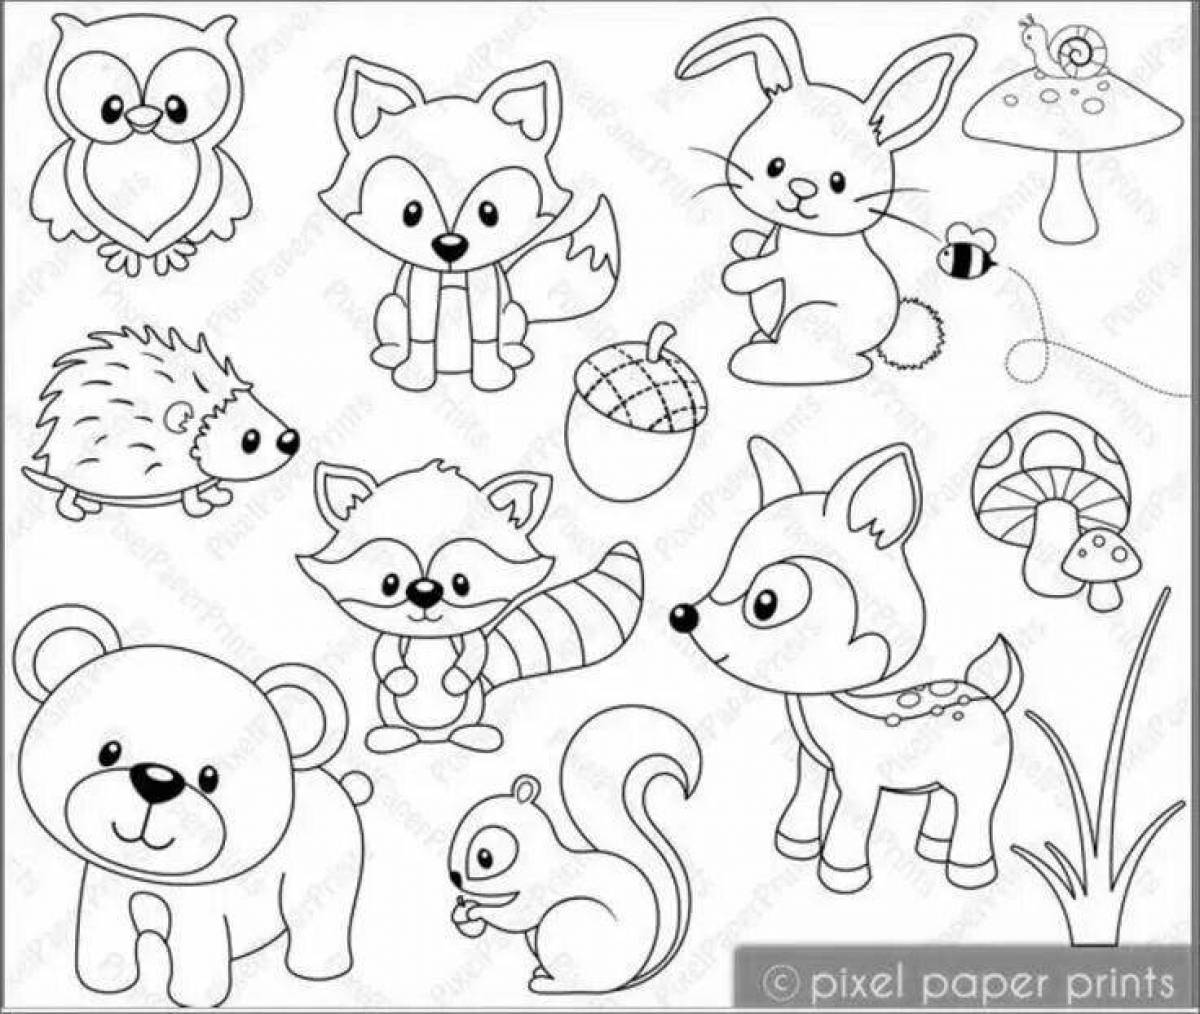 Cute coloring drawings